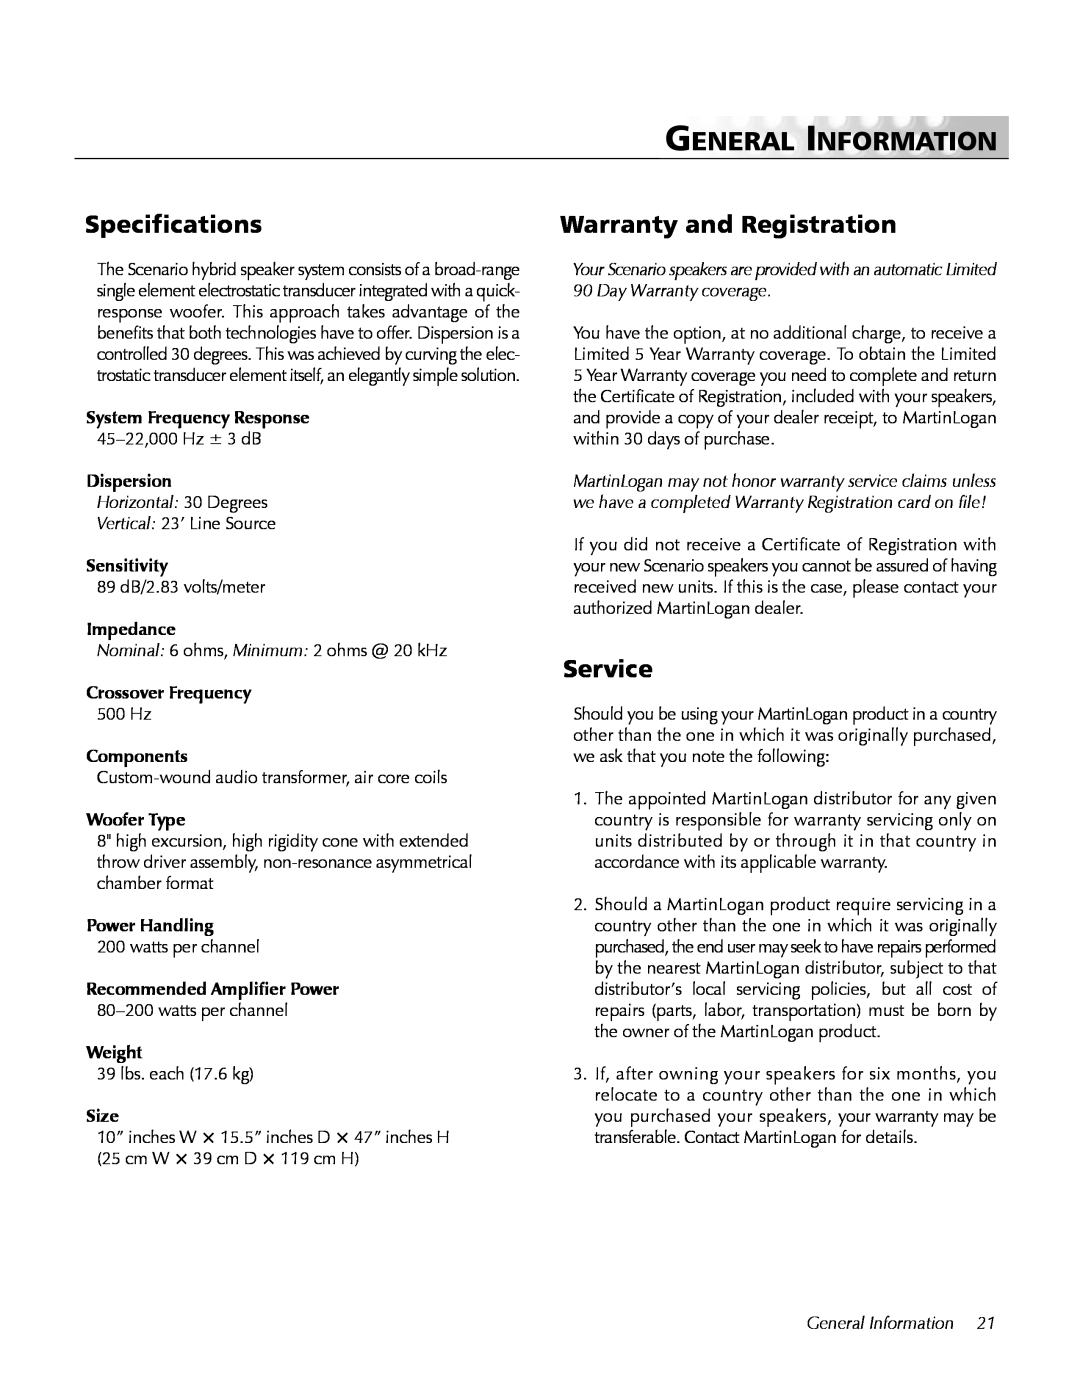 MartinLogan Loudspeaker Systems user manual General Information, Specifications, Warranty and Registration, Service 